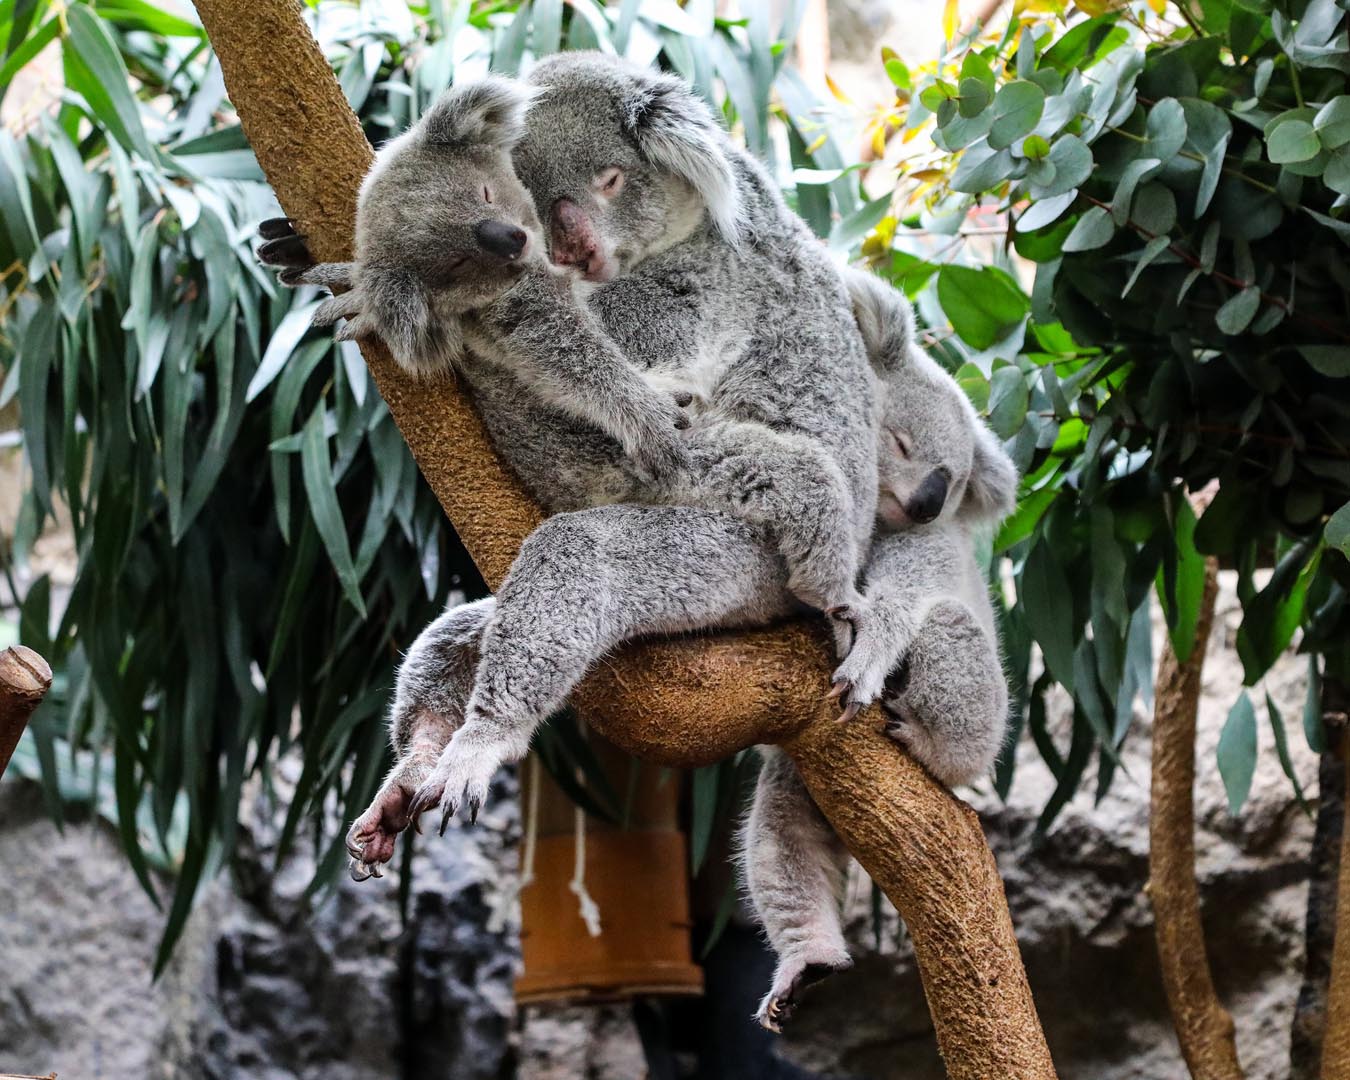 Queensland koalas in a cuddle pile on branch Image: RHIORDAN LANGAN-FORTUNE 2023